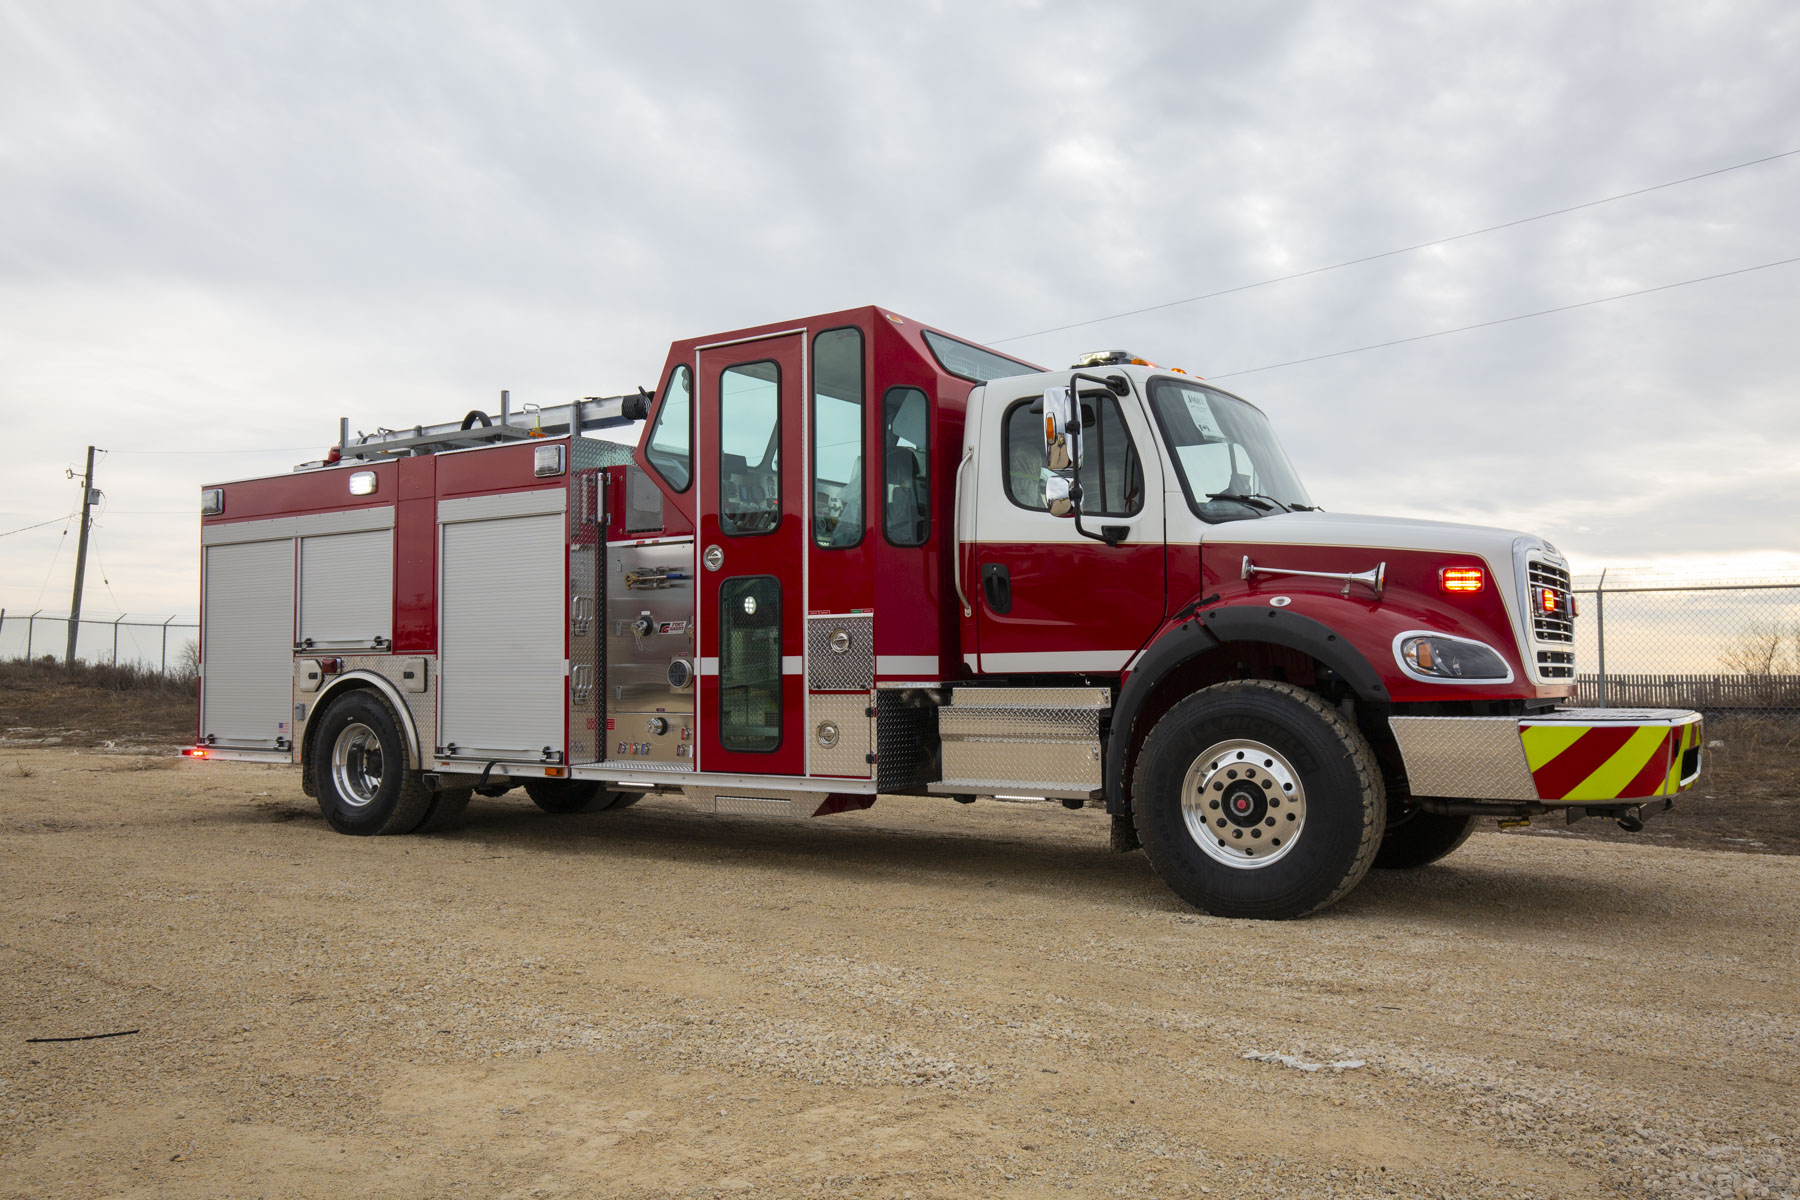 SIREN WISCONSIN | Fort Garry Fire Trucks - Fire & Rescue Fire Truck Siren